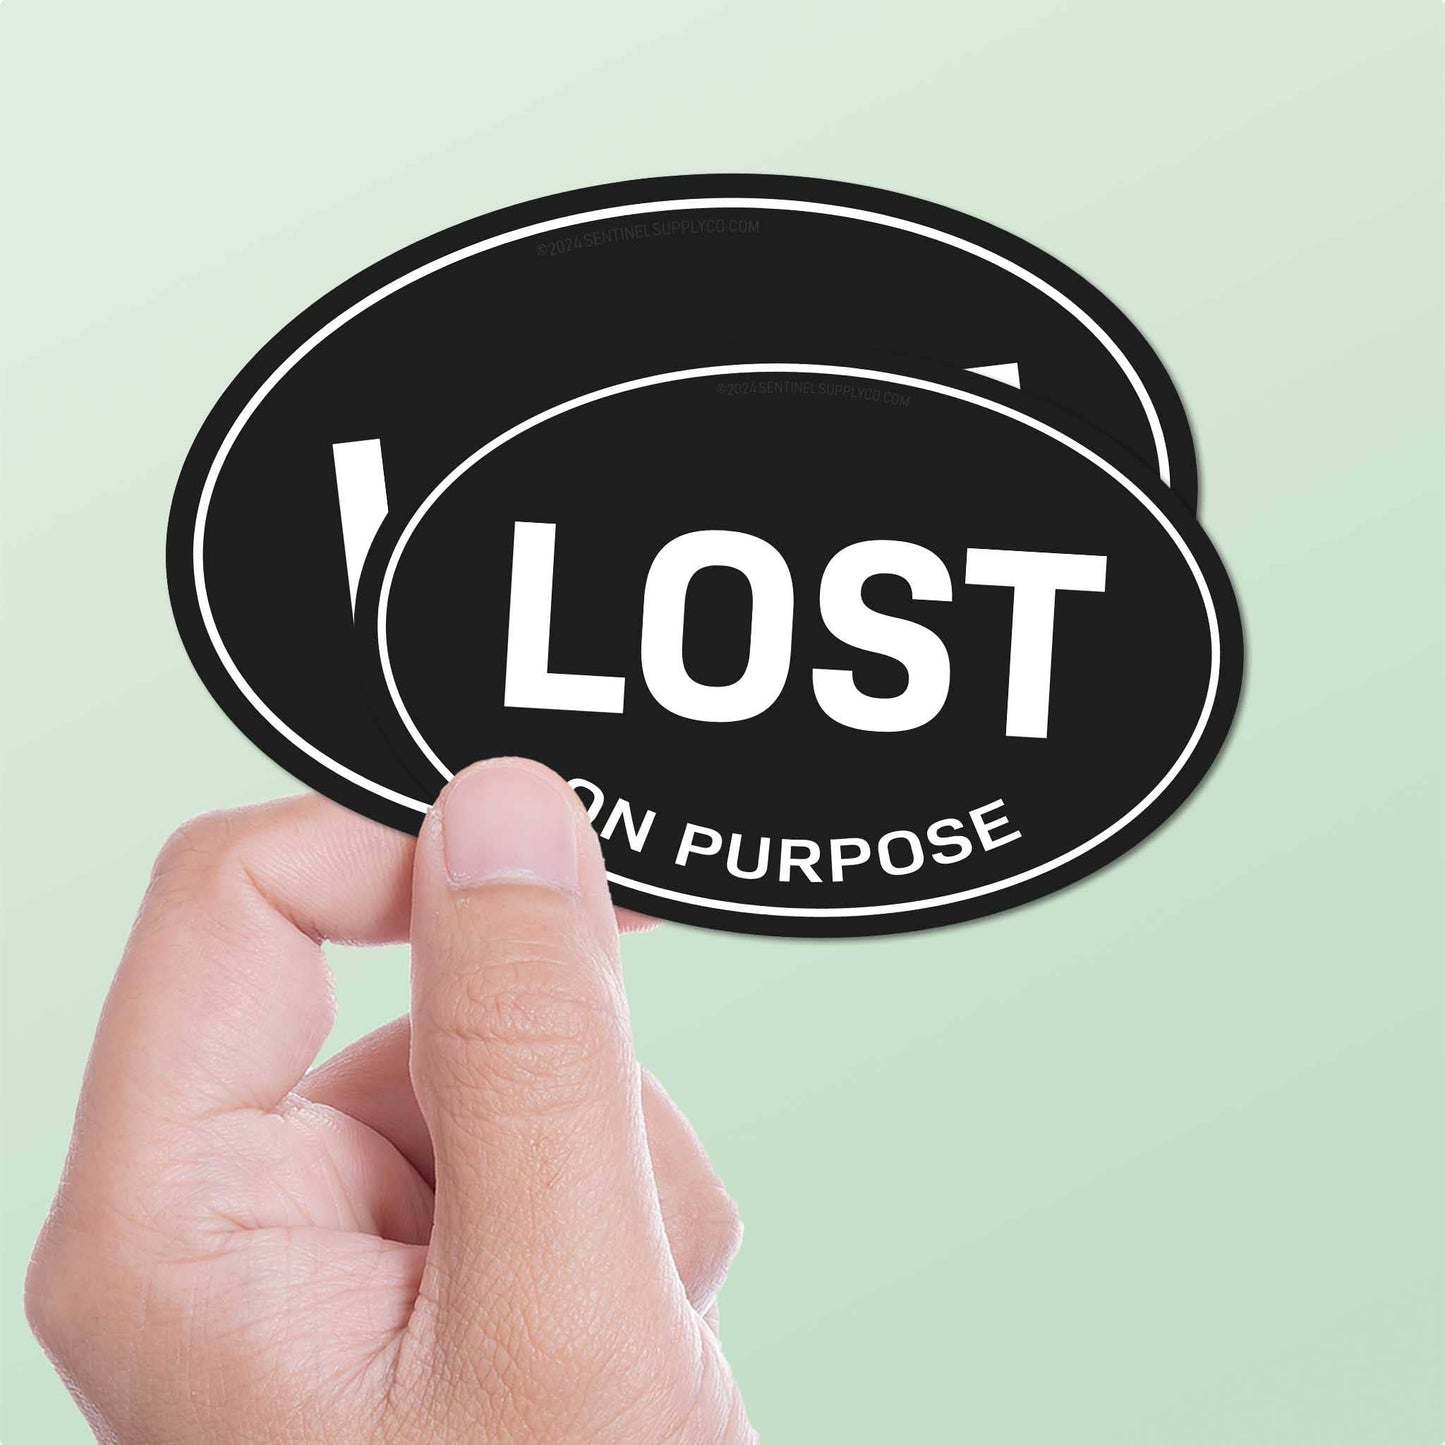 Lost on Purpose Black Oval Sticker